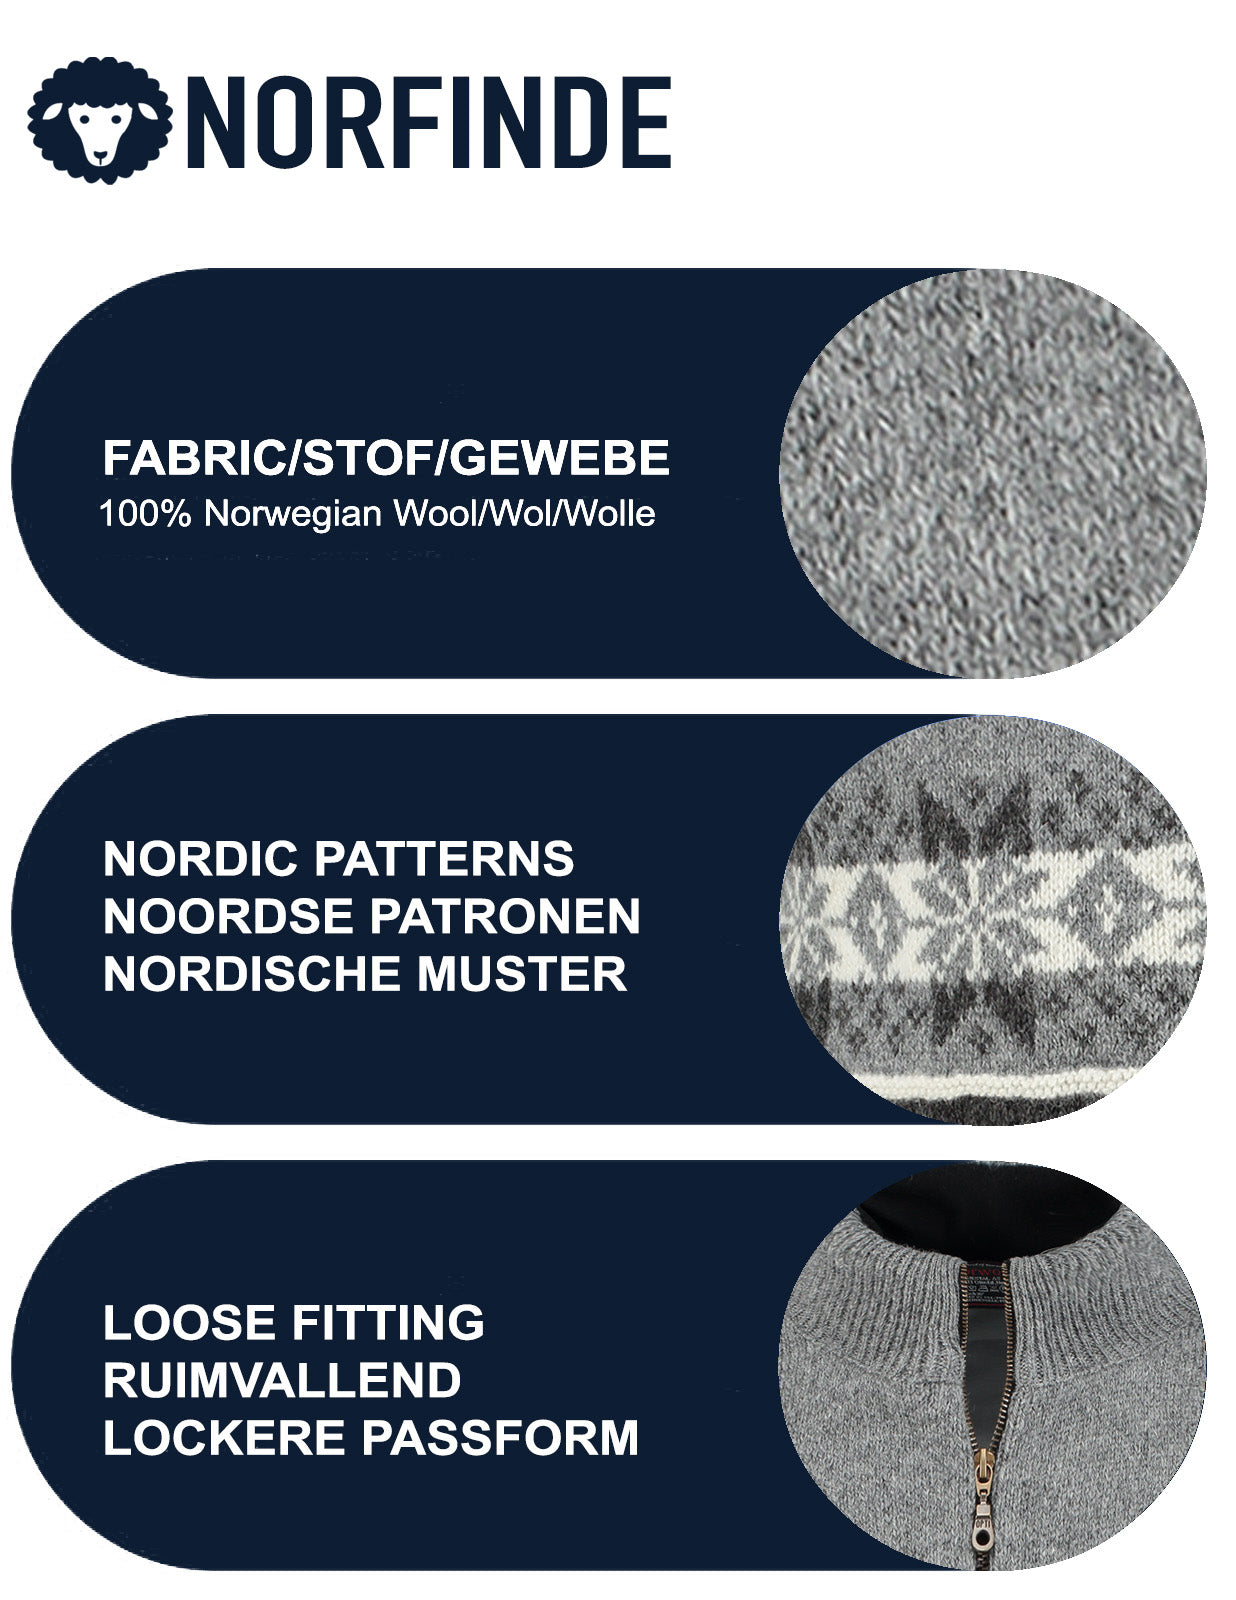 Cardigan scandinave - 100% pure laine vierge norvégienne - gris